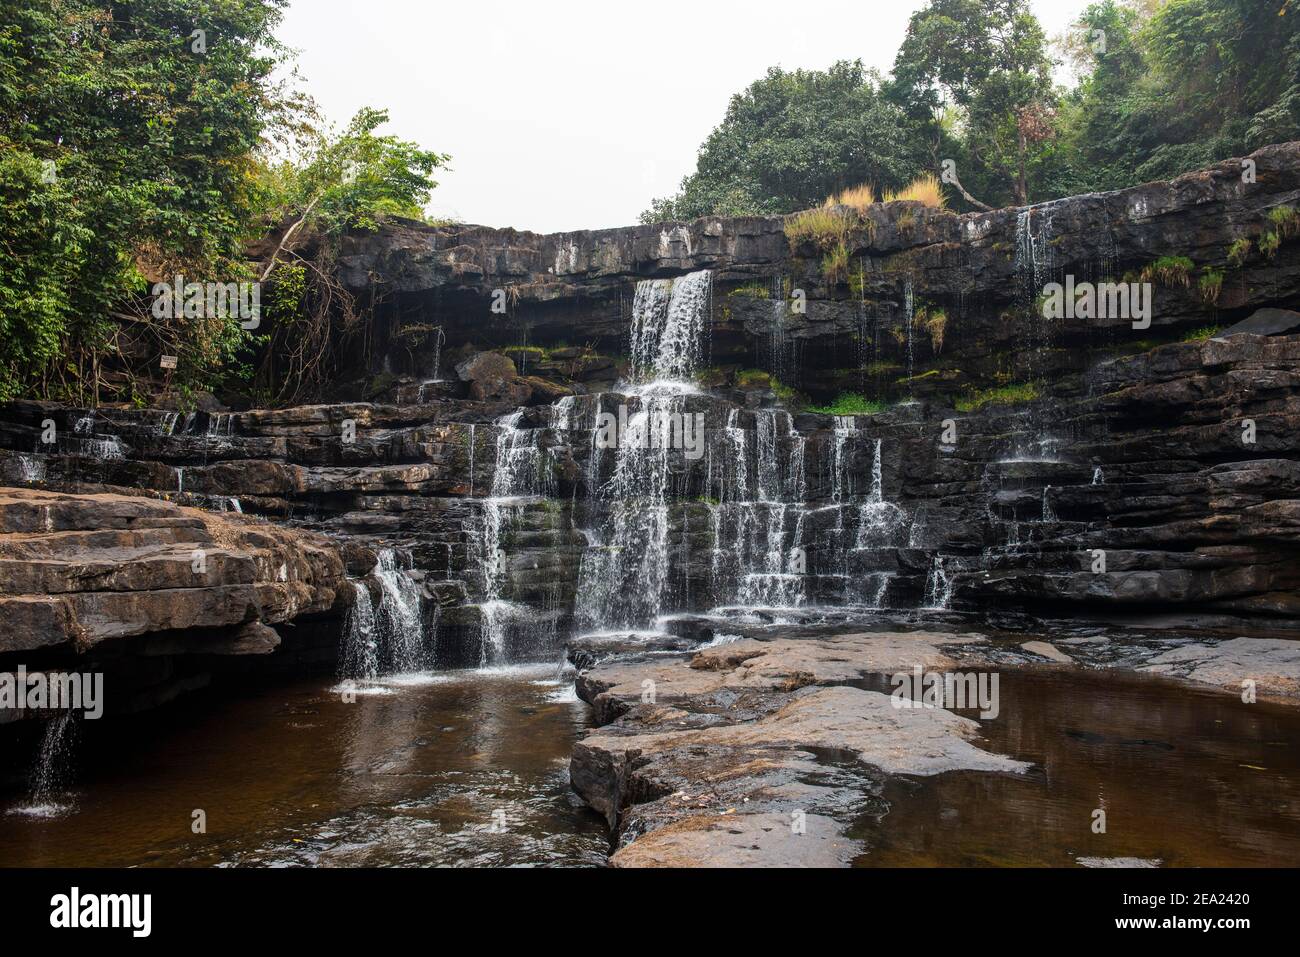 Soumba waterfall, Republic Guinea Conakry Photo - Alamy